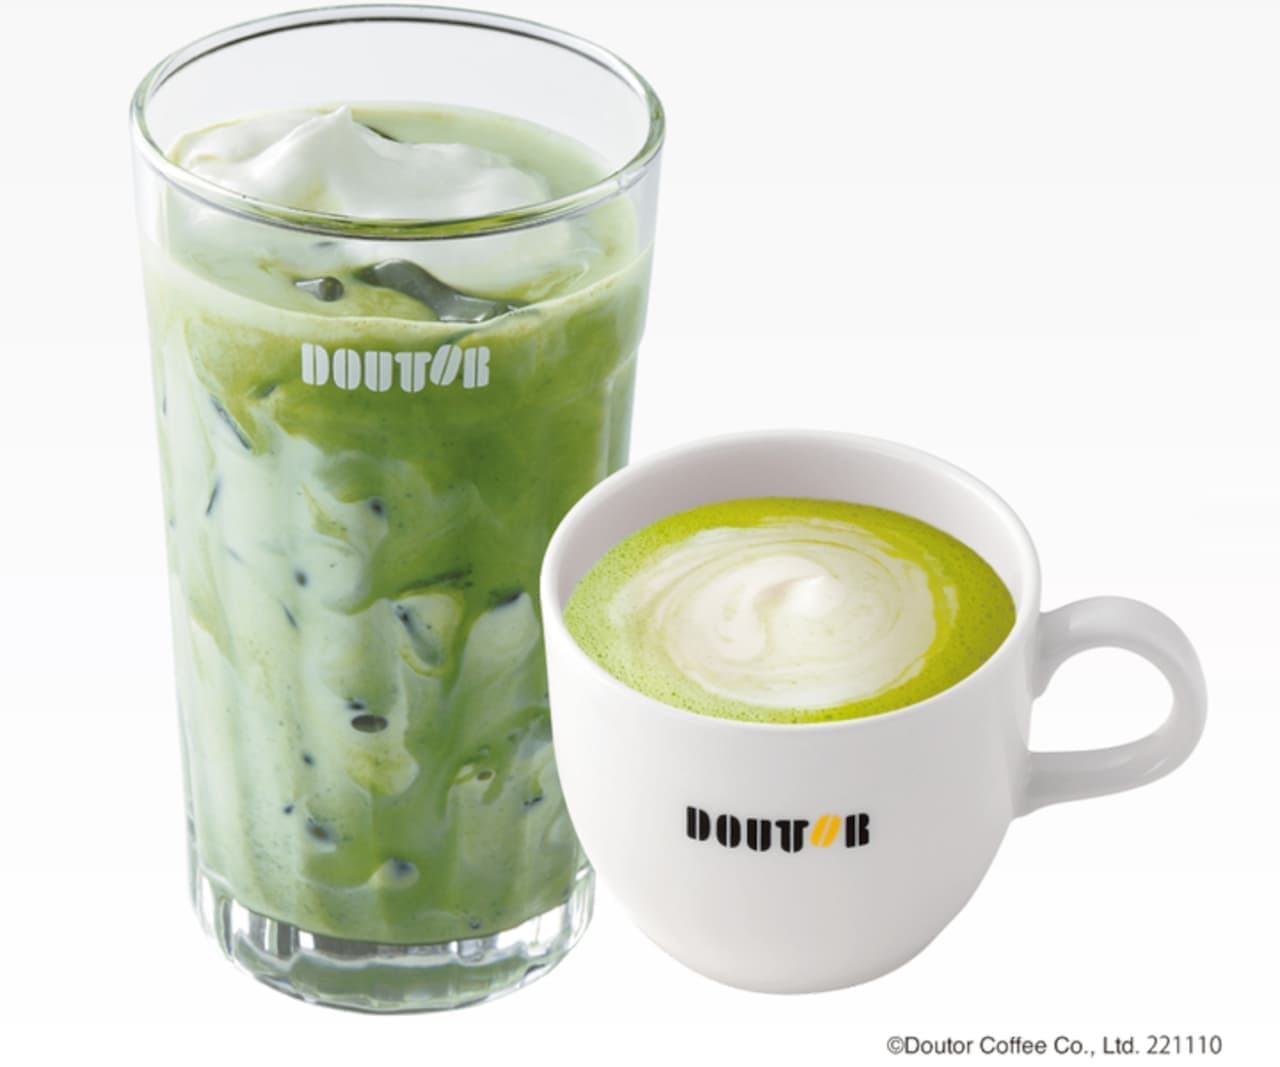 Doutor Coffee Shop "Luxurious Matcha Latte with Kyoto-grown Ichibancha Green Tea".